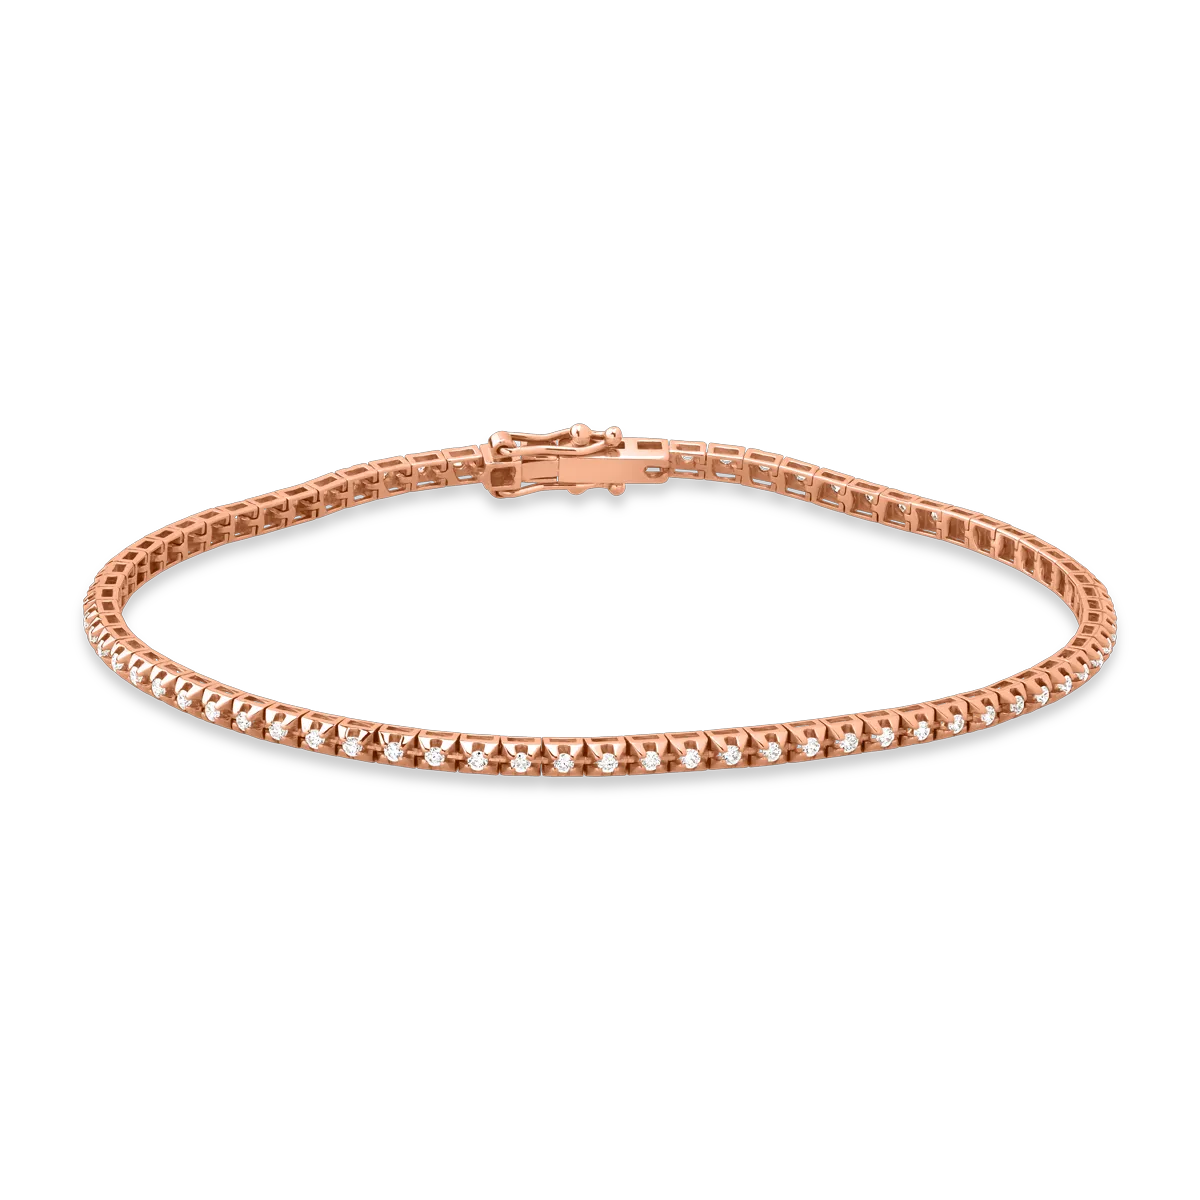 18K rose gold tennis bracelet with 1.22ct brown diamonds